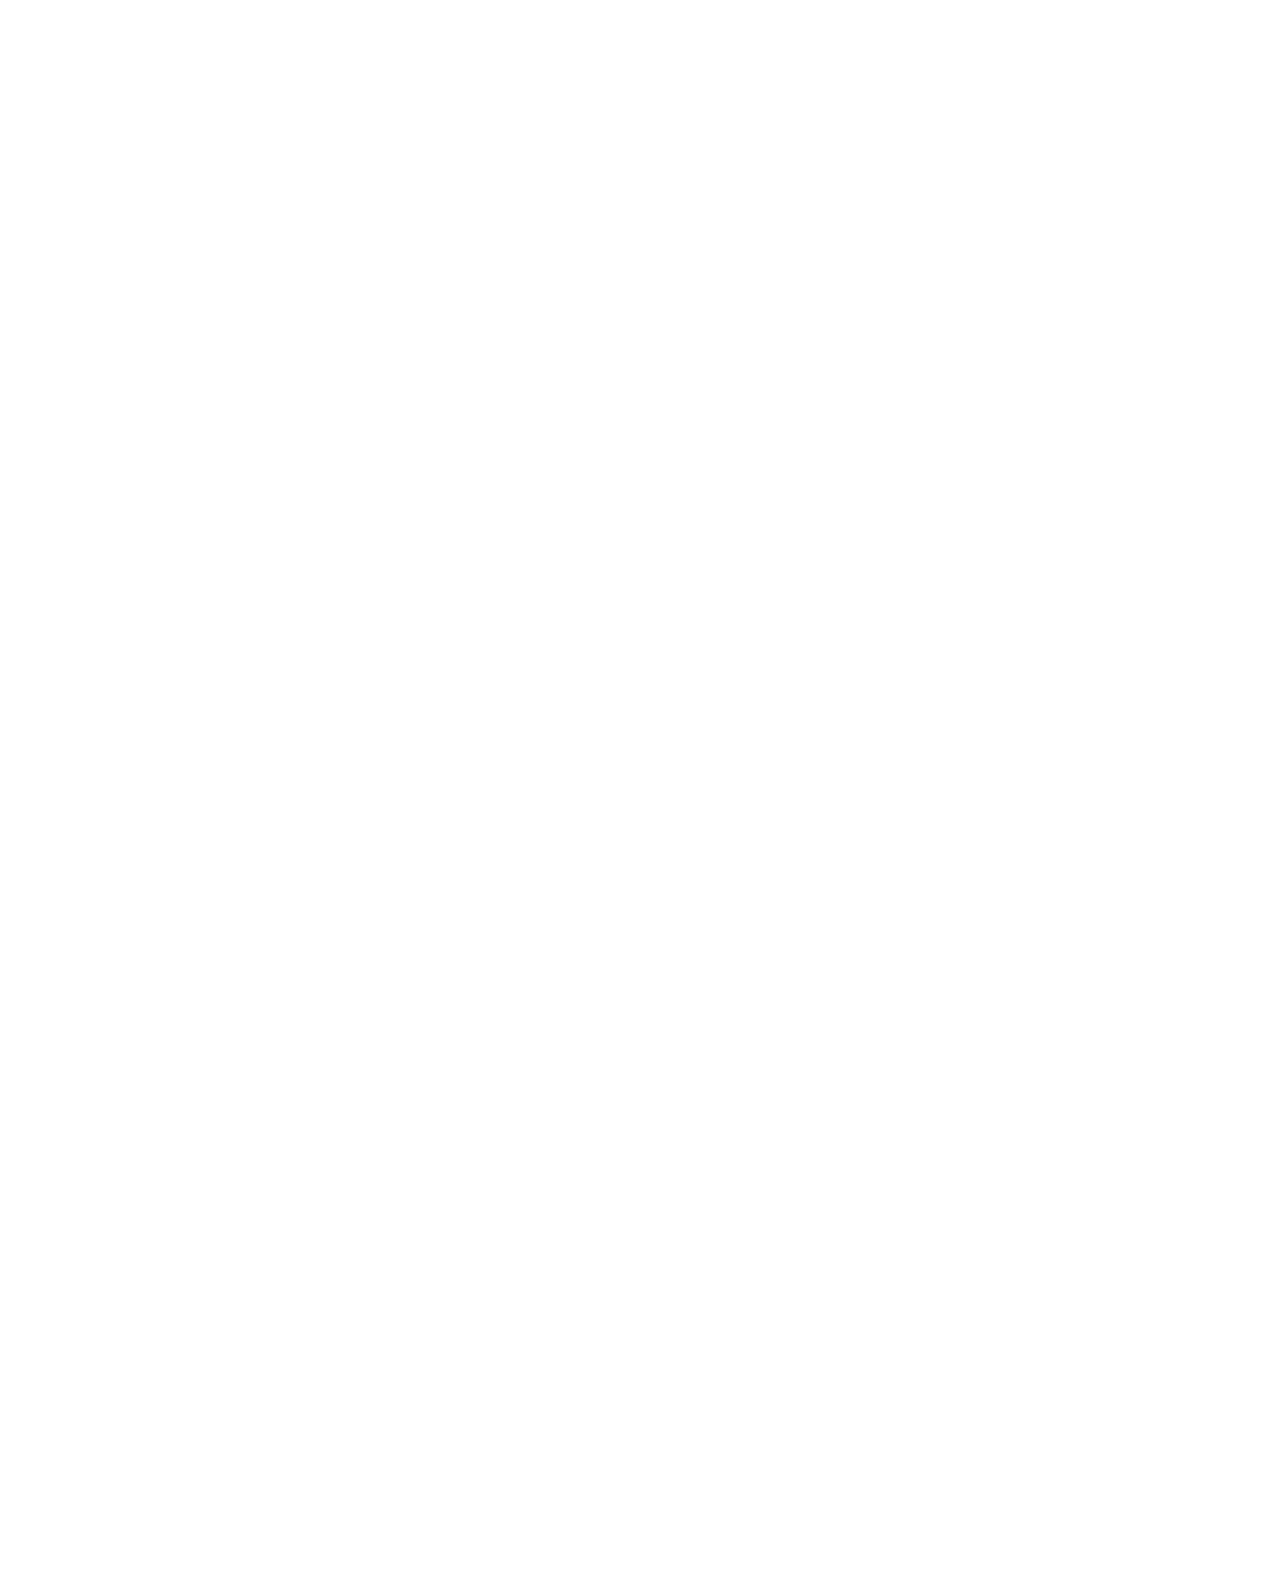 Healthcare Services Group logo for dark backgrounds (transparent PNG)